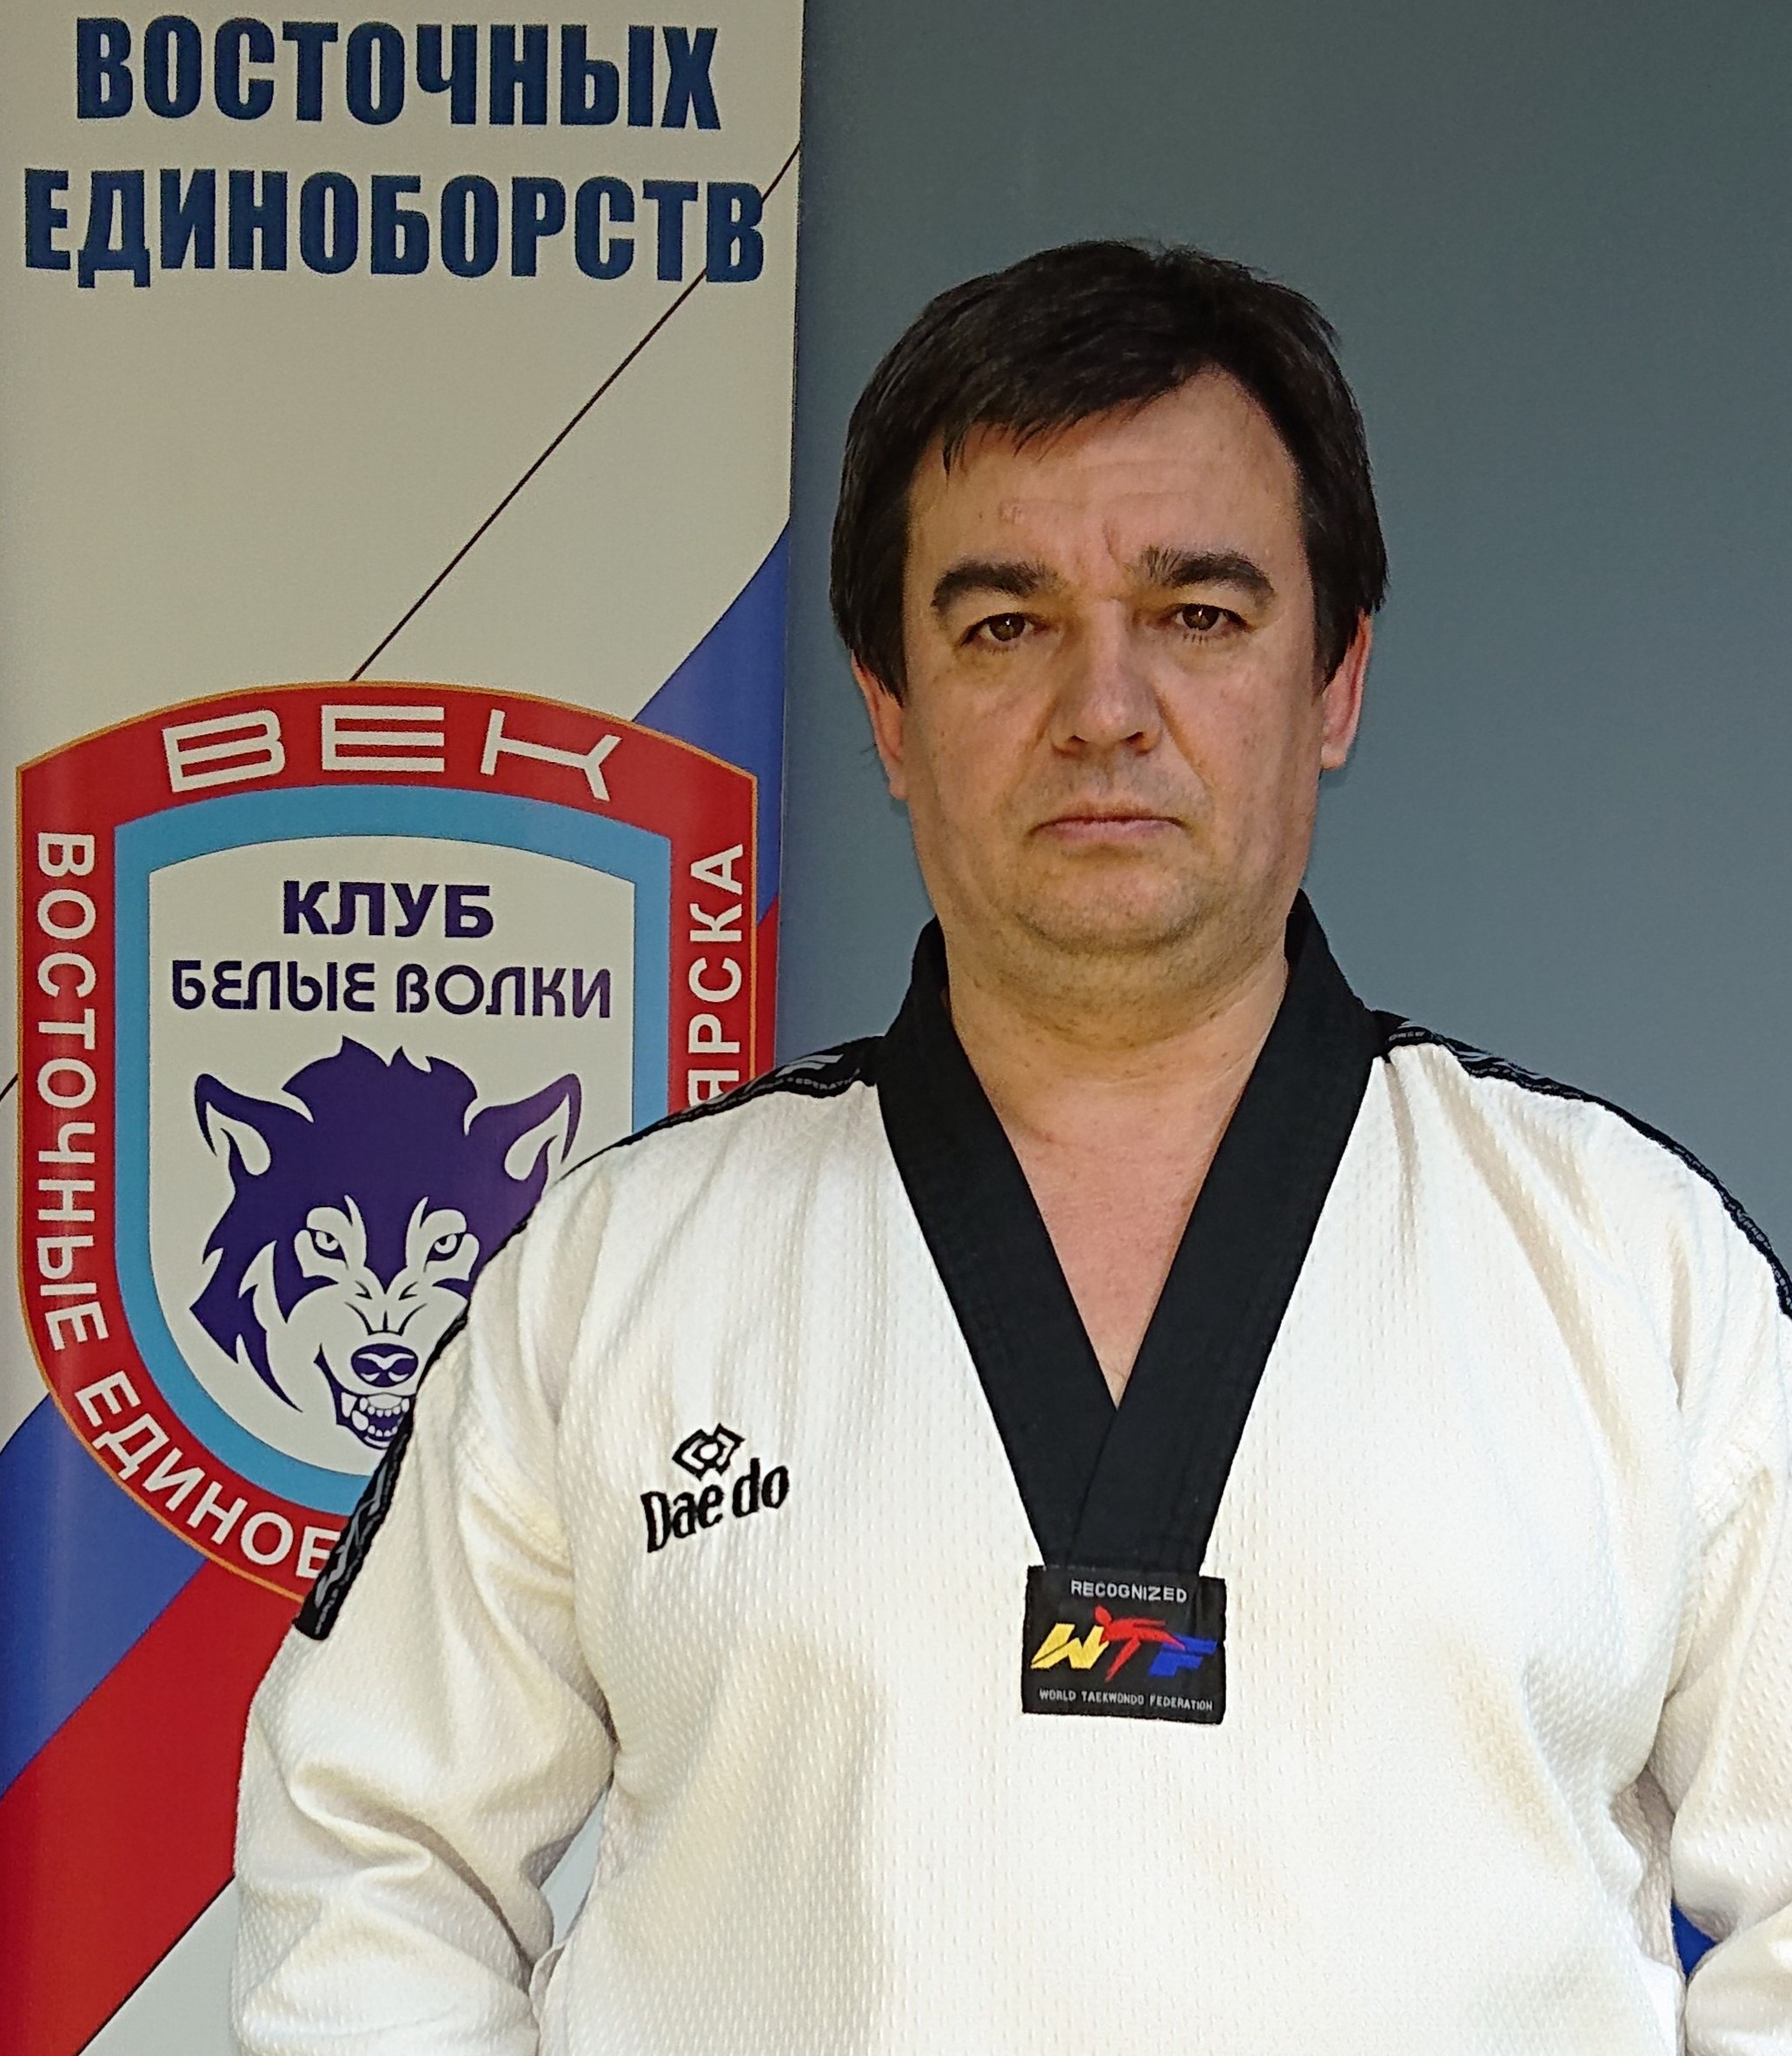 Егоршин Роман Владимирович